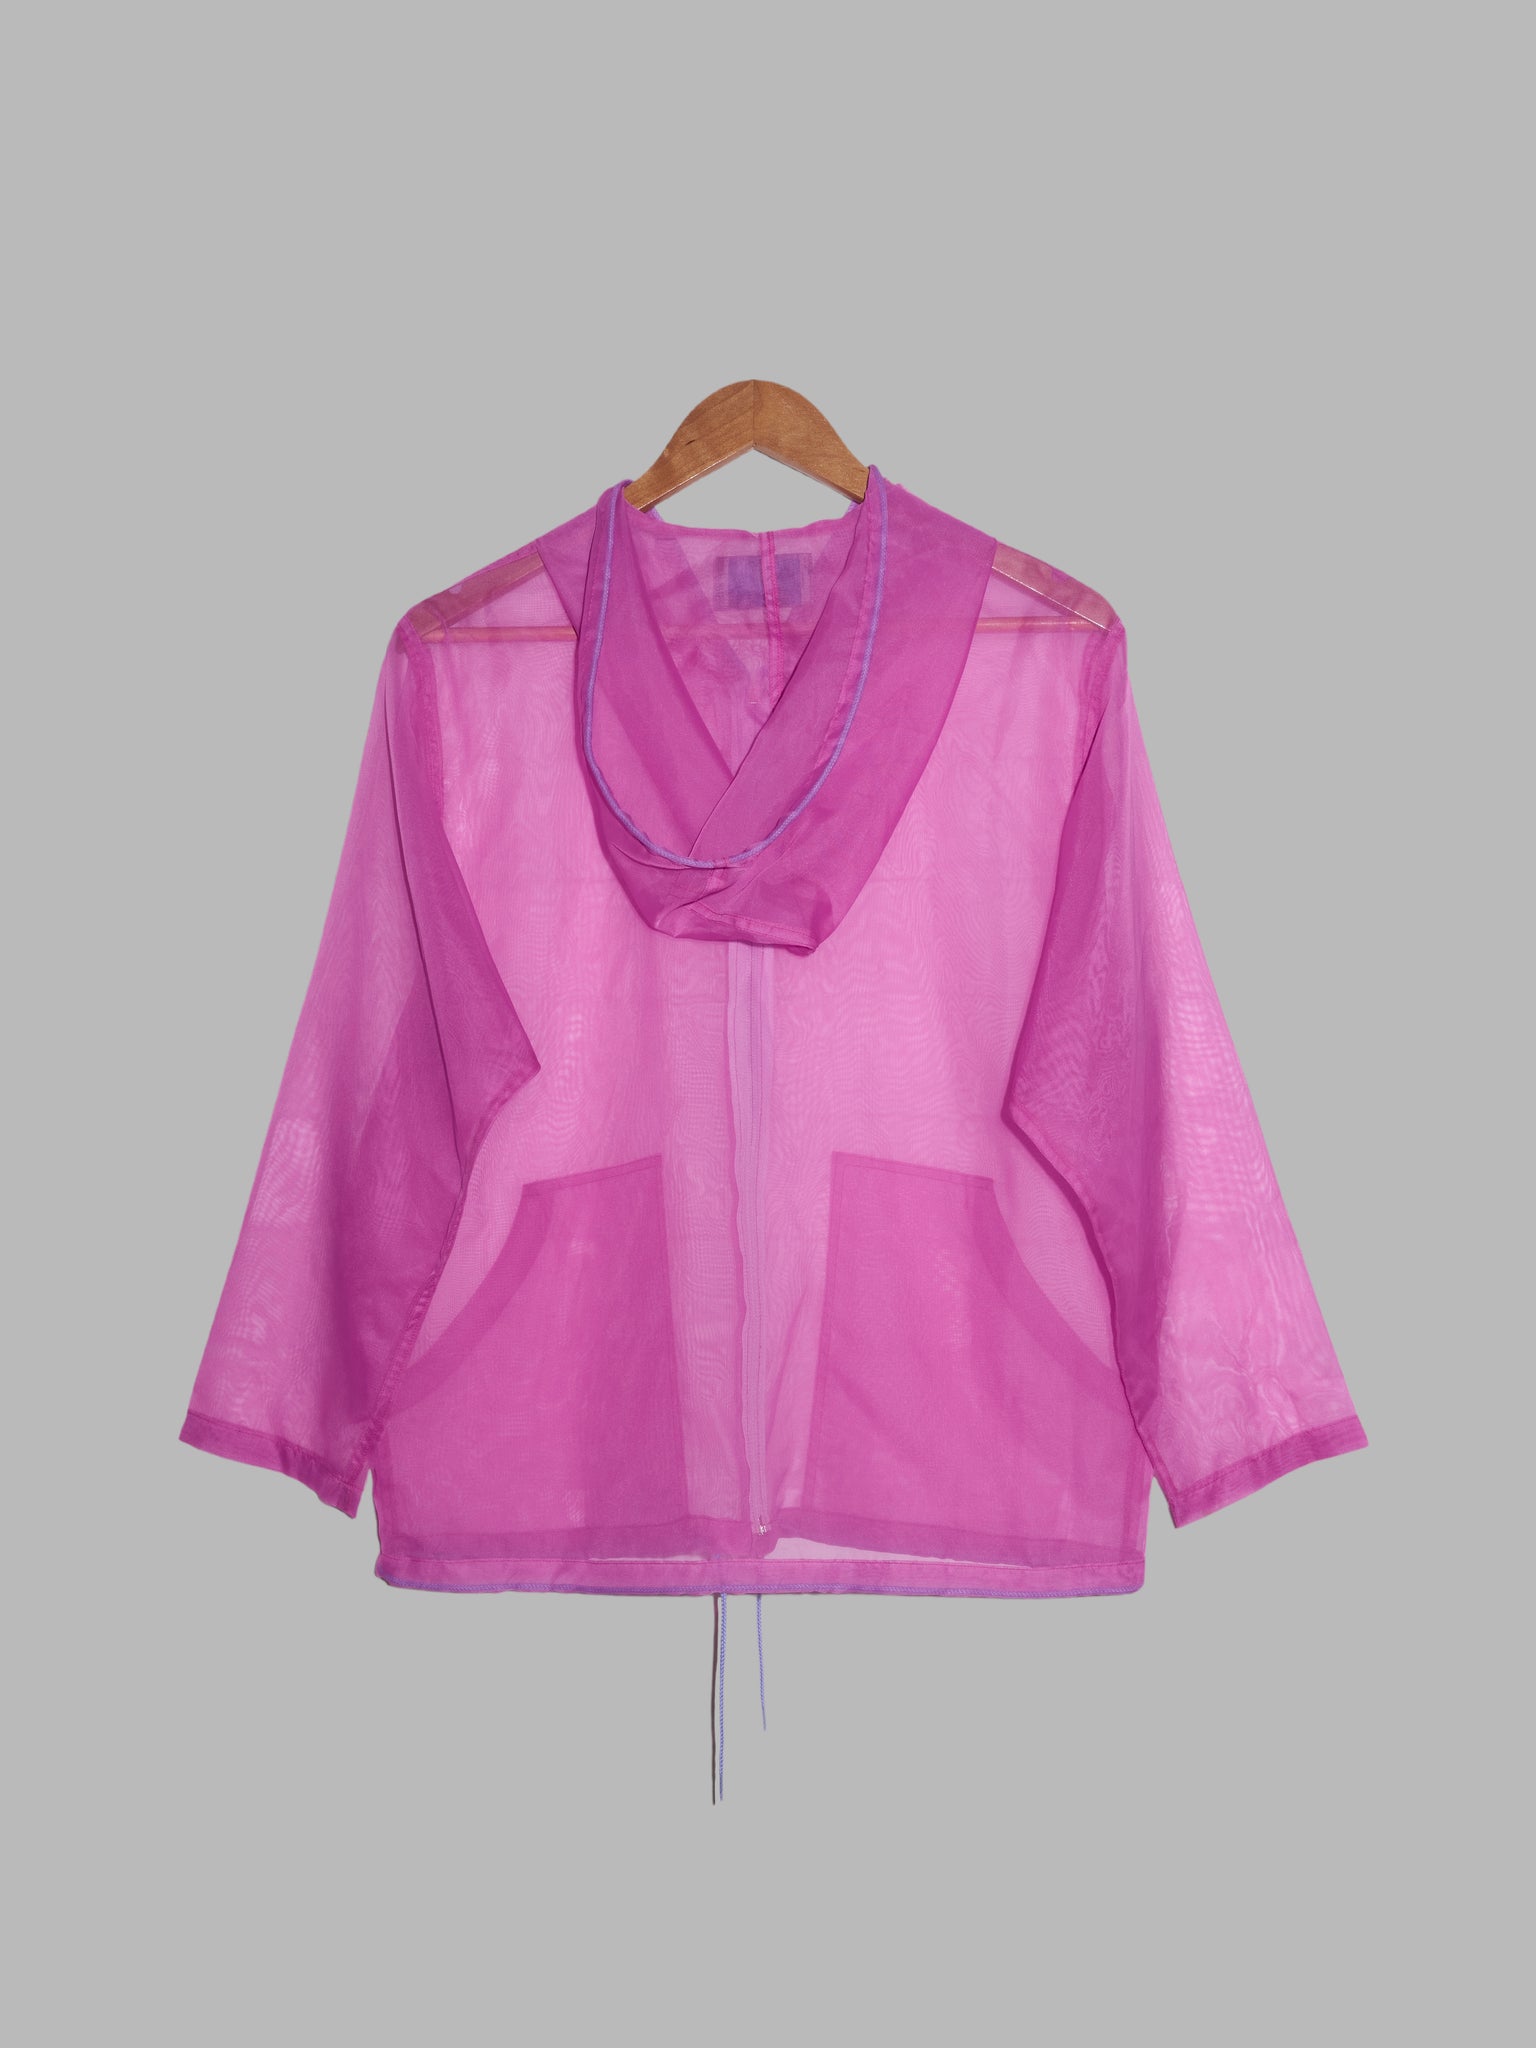 Kenzo Jeans 1990s sheer pink nylon organza hooded jacket